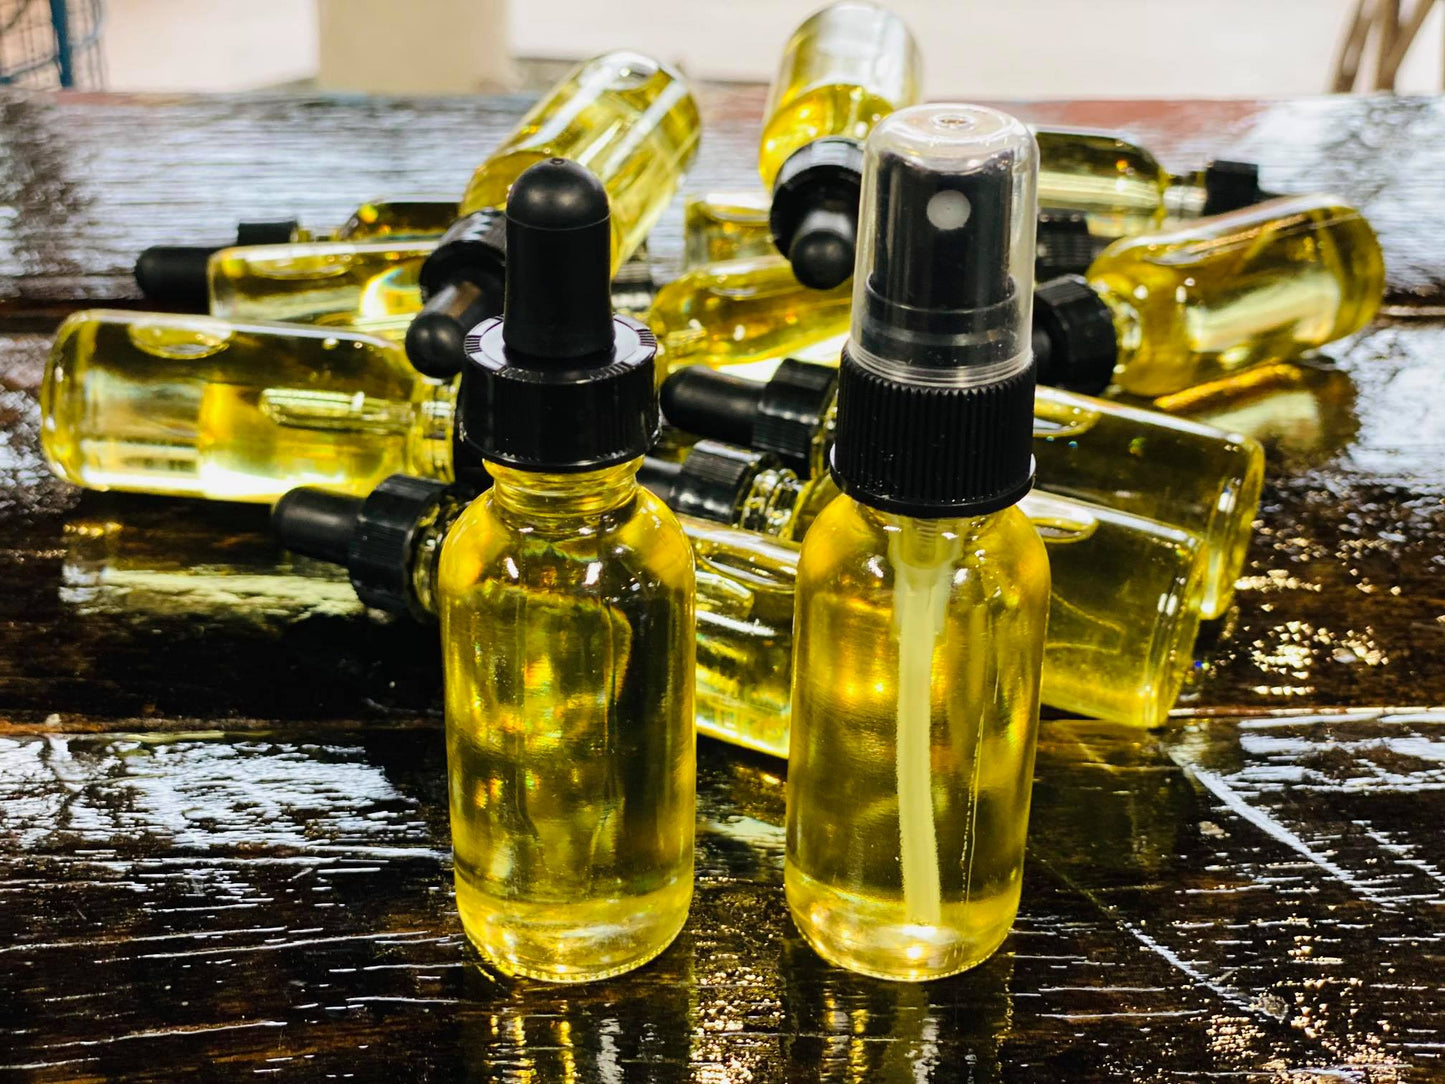 Cedar Fragrance Oil